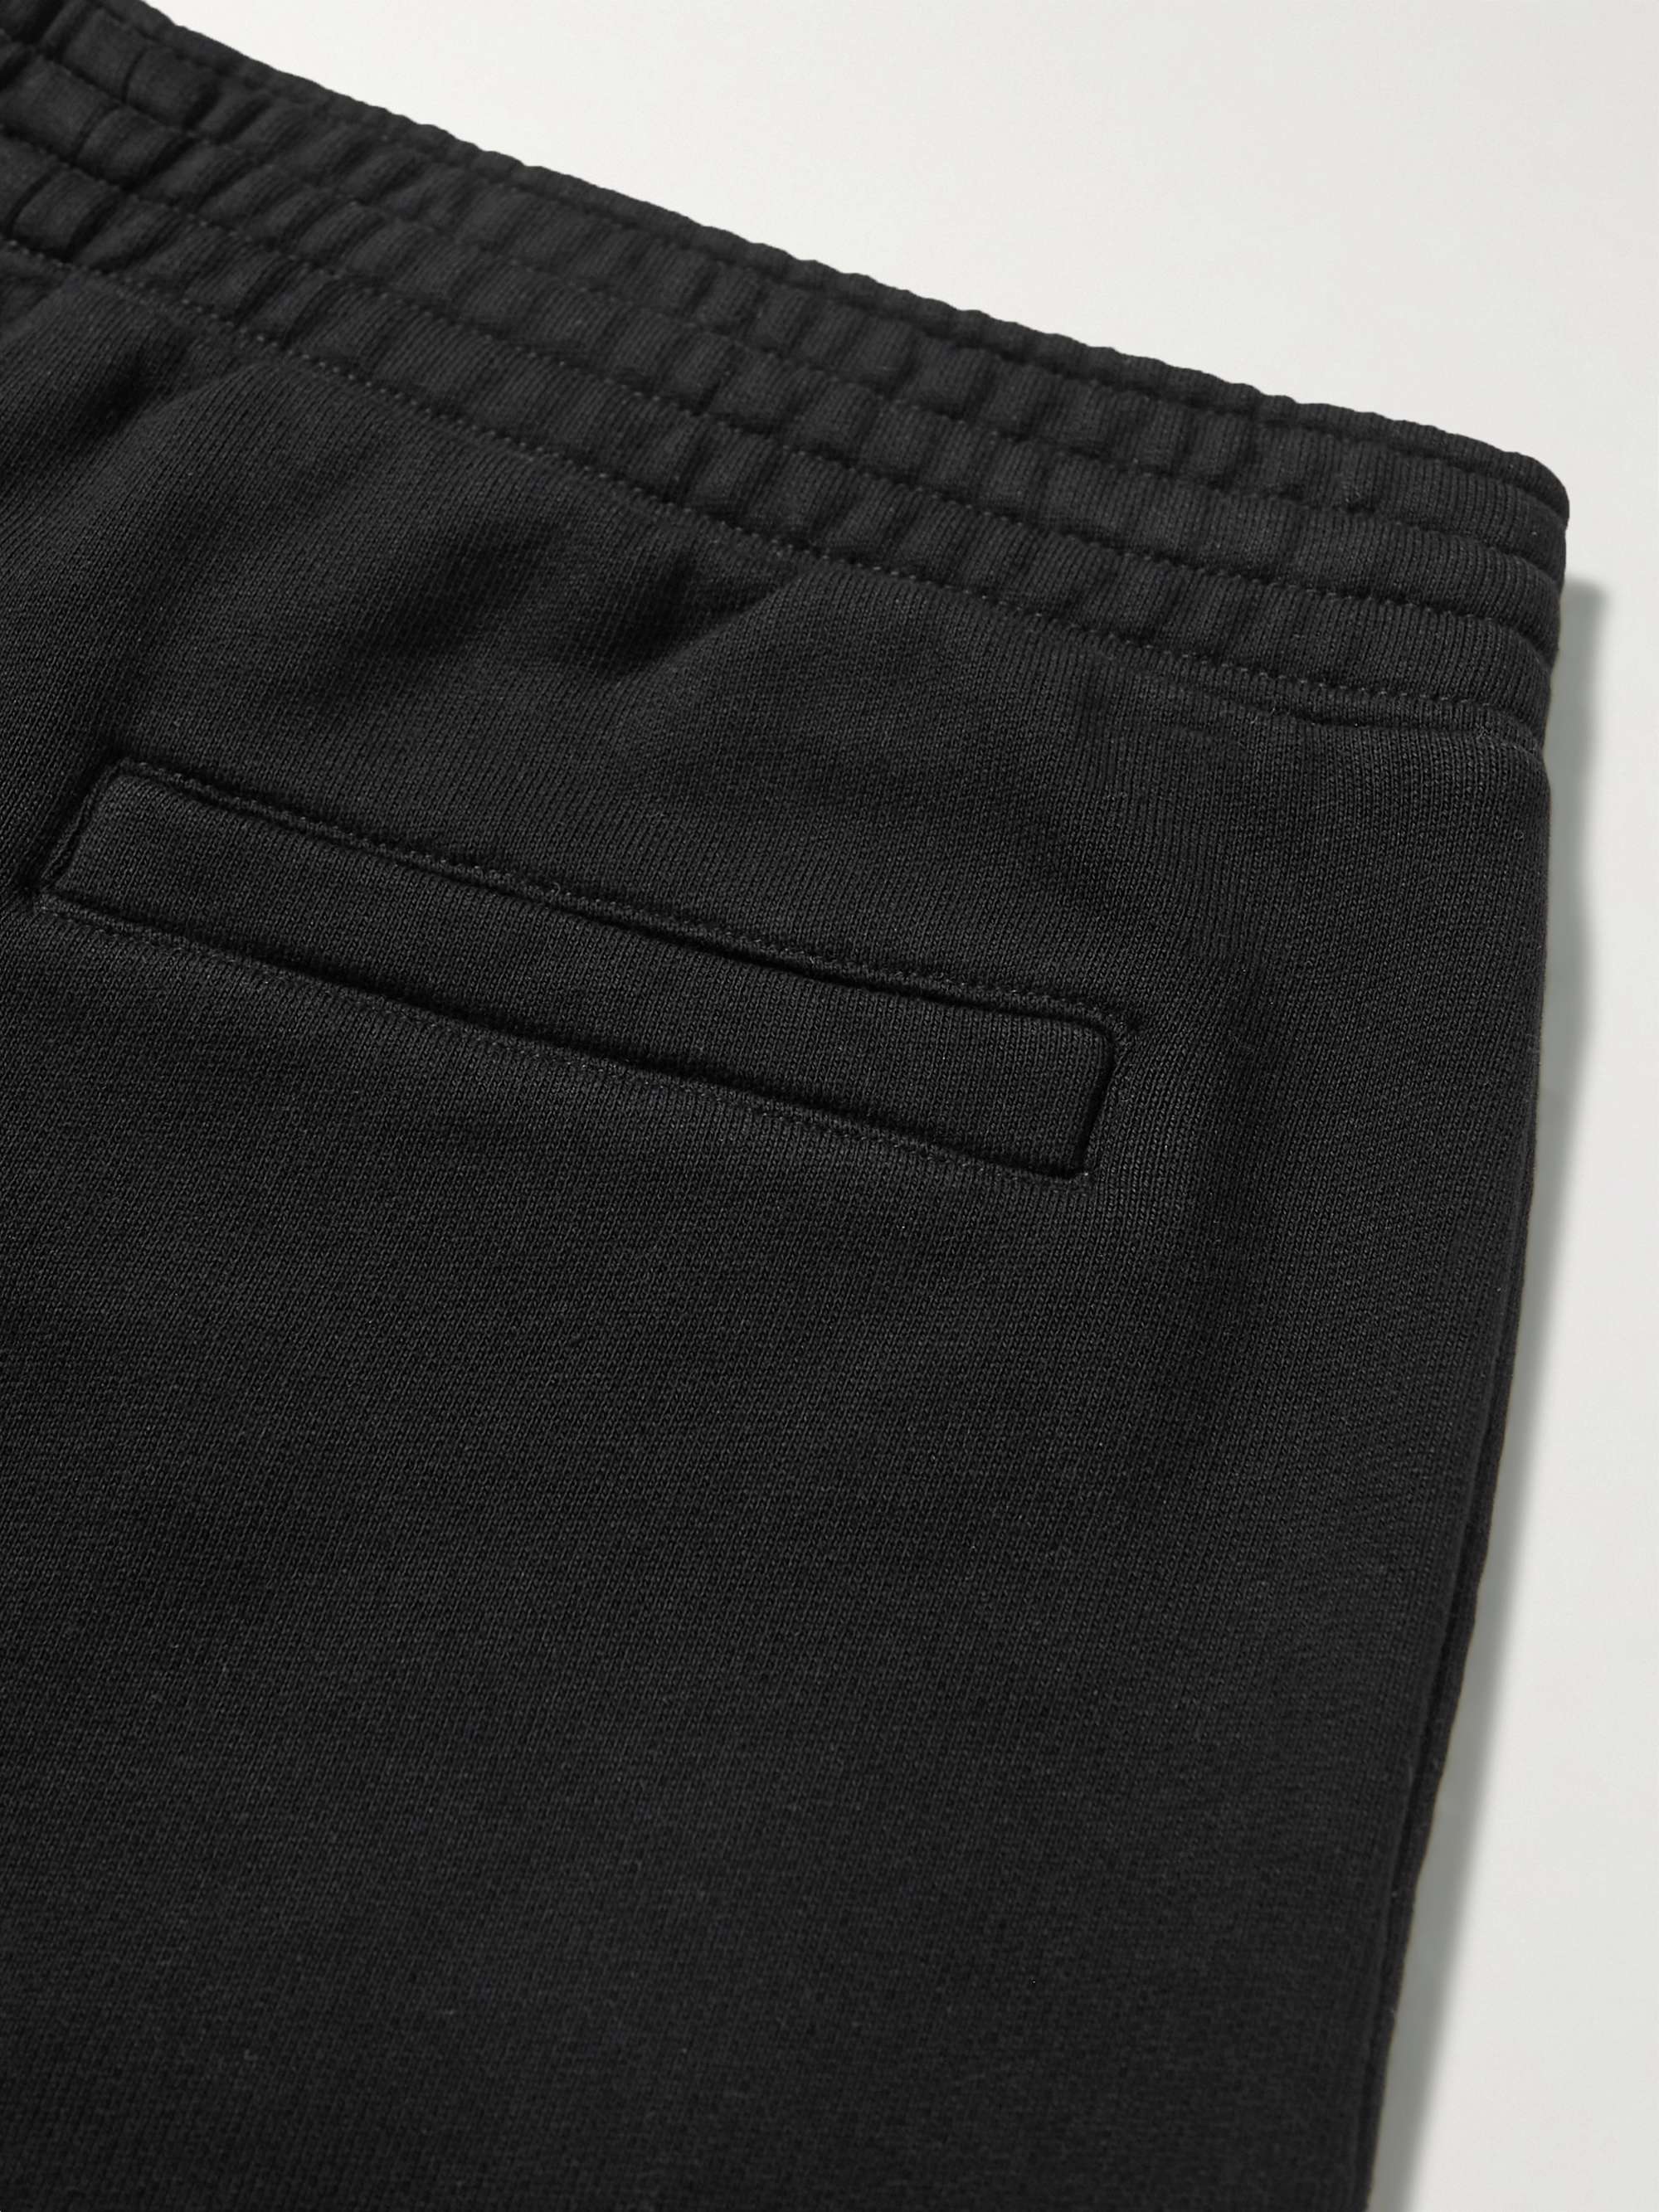 GIVENCHY Logo-Print Cotton-Jersey Shorts